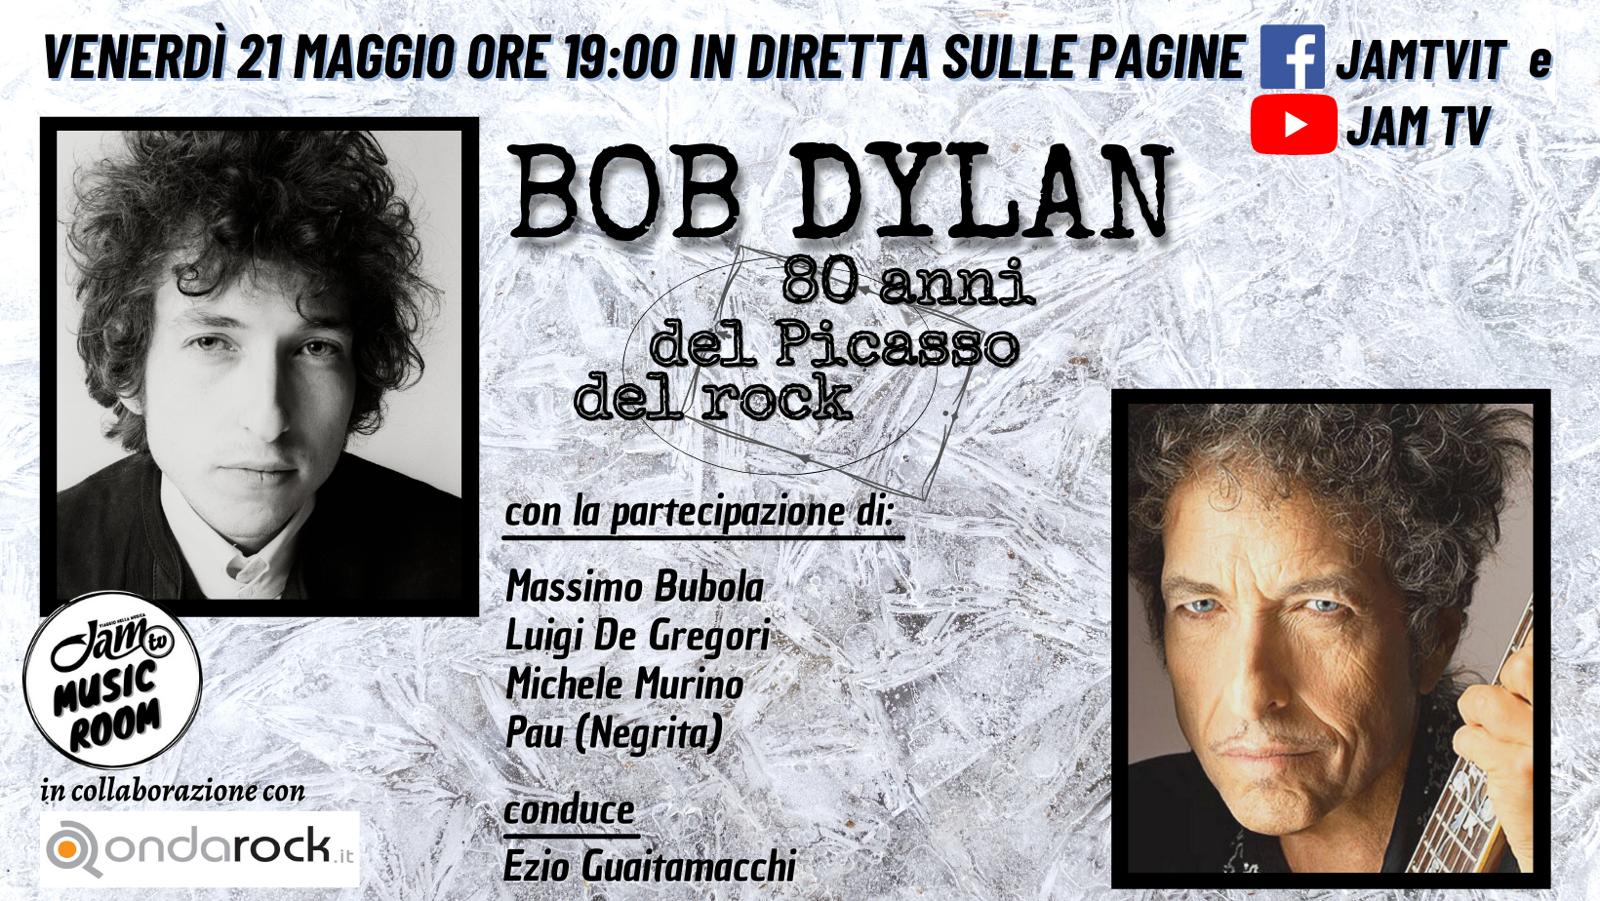 Buon compleanno Bob Dylan